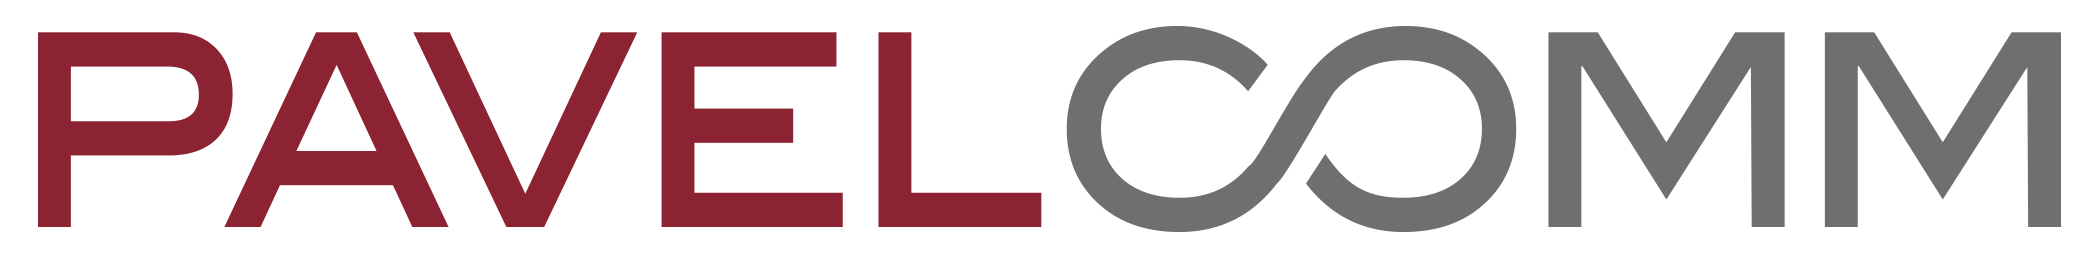 PAVELCOMM INC Company Logo